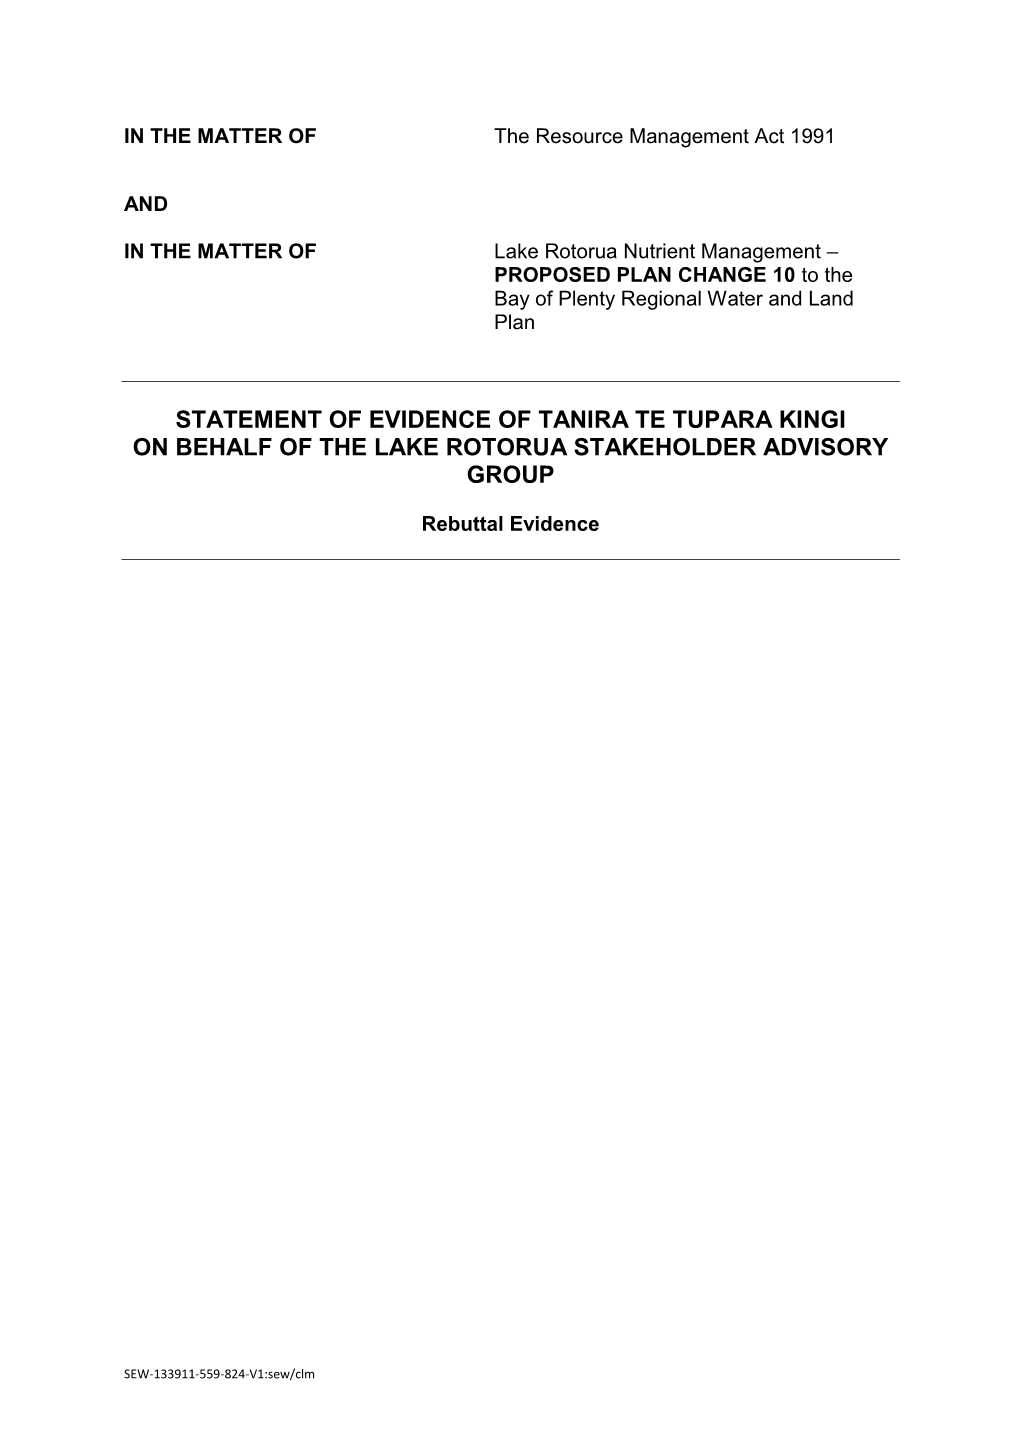 Statement of Evidence of Tanira Te Tupara Kingi on Behalf of the Lake Rotorua Stakeholder Advisory Group